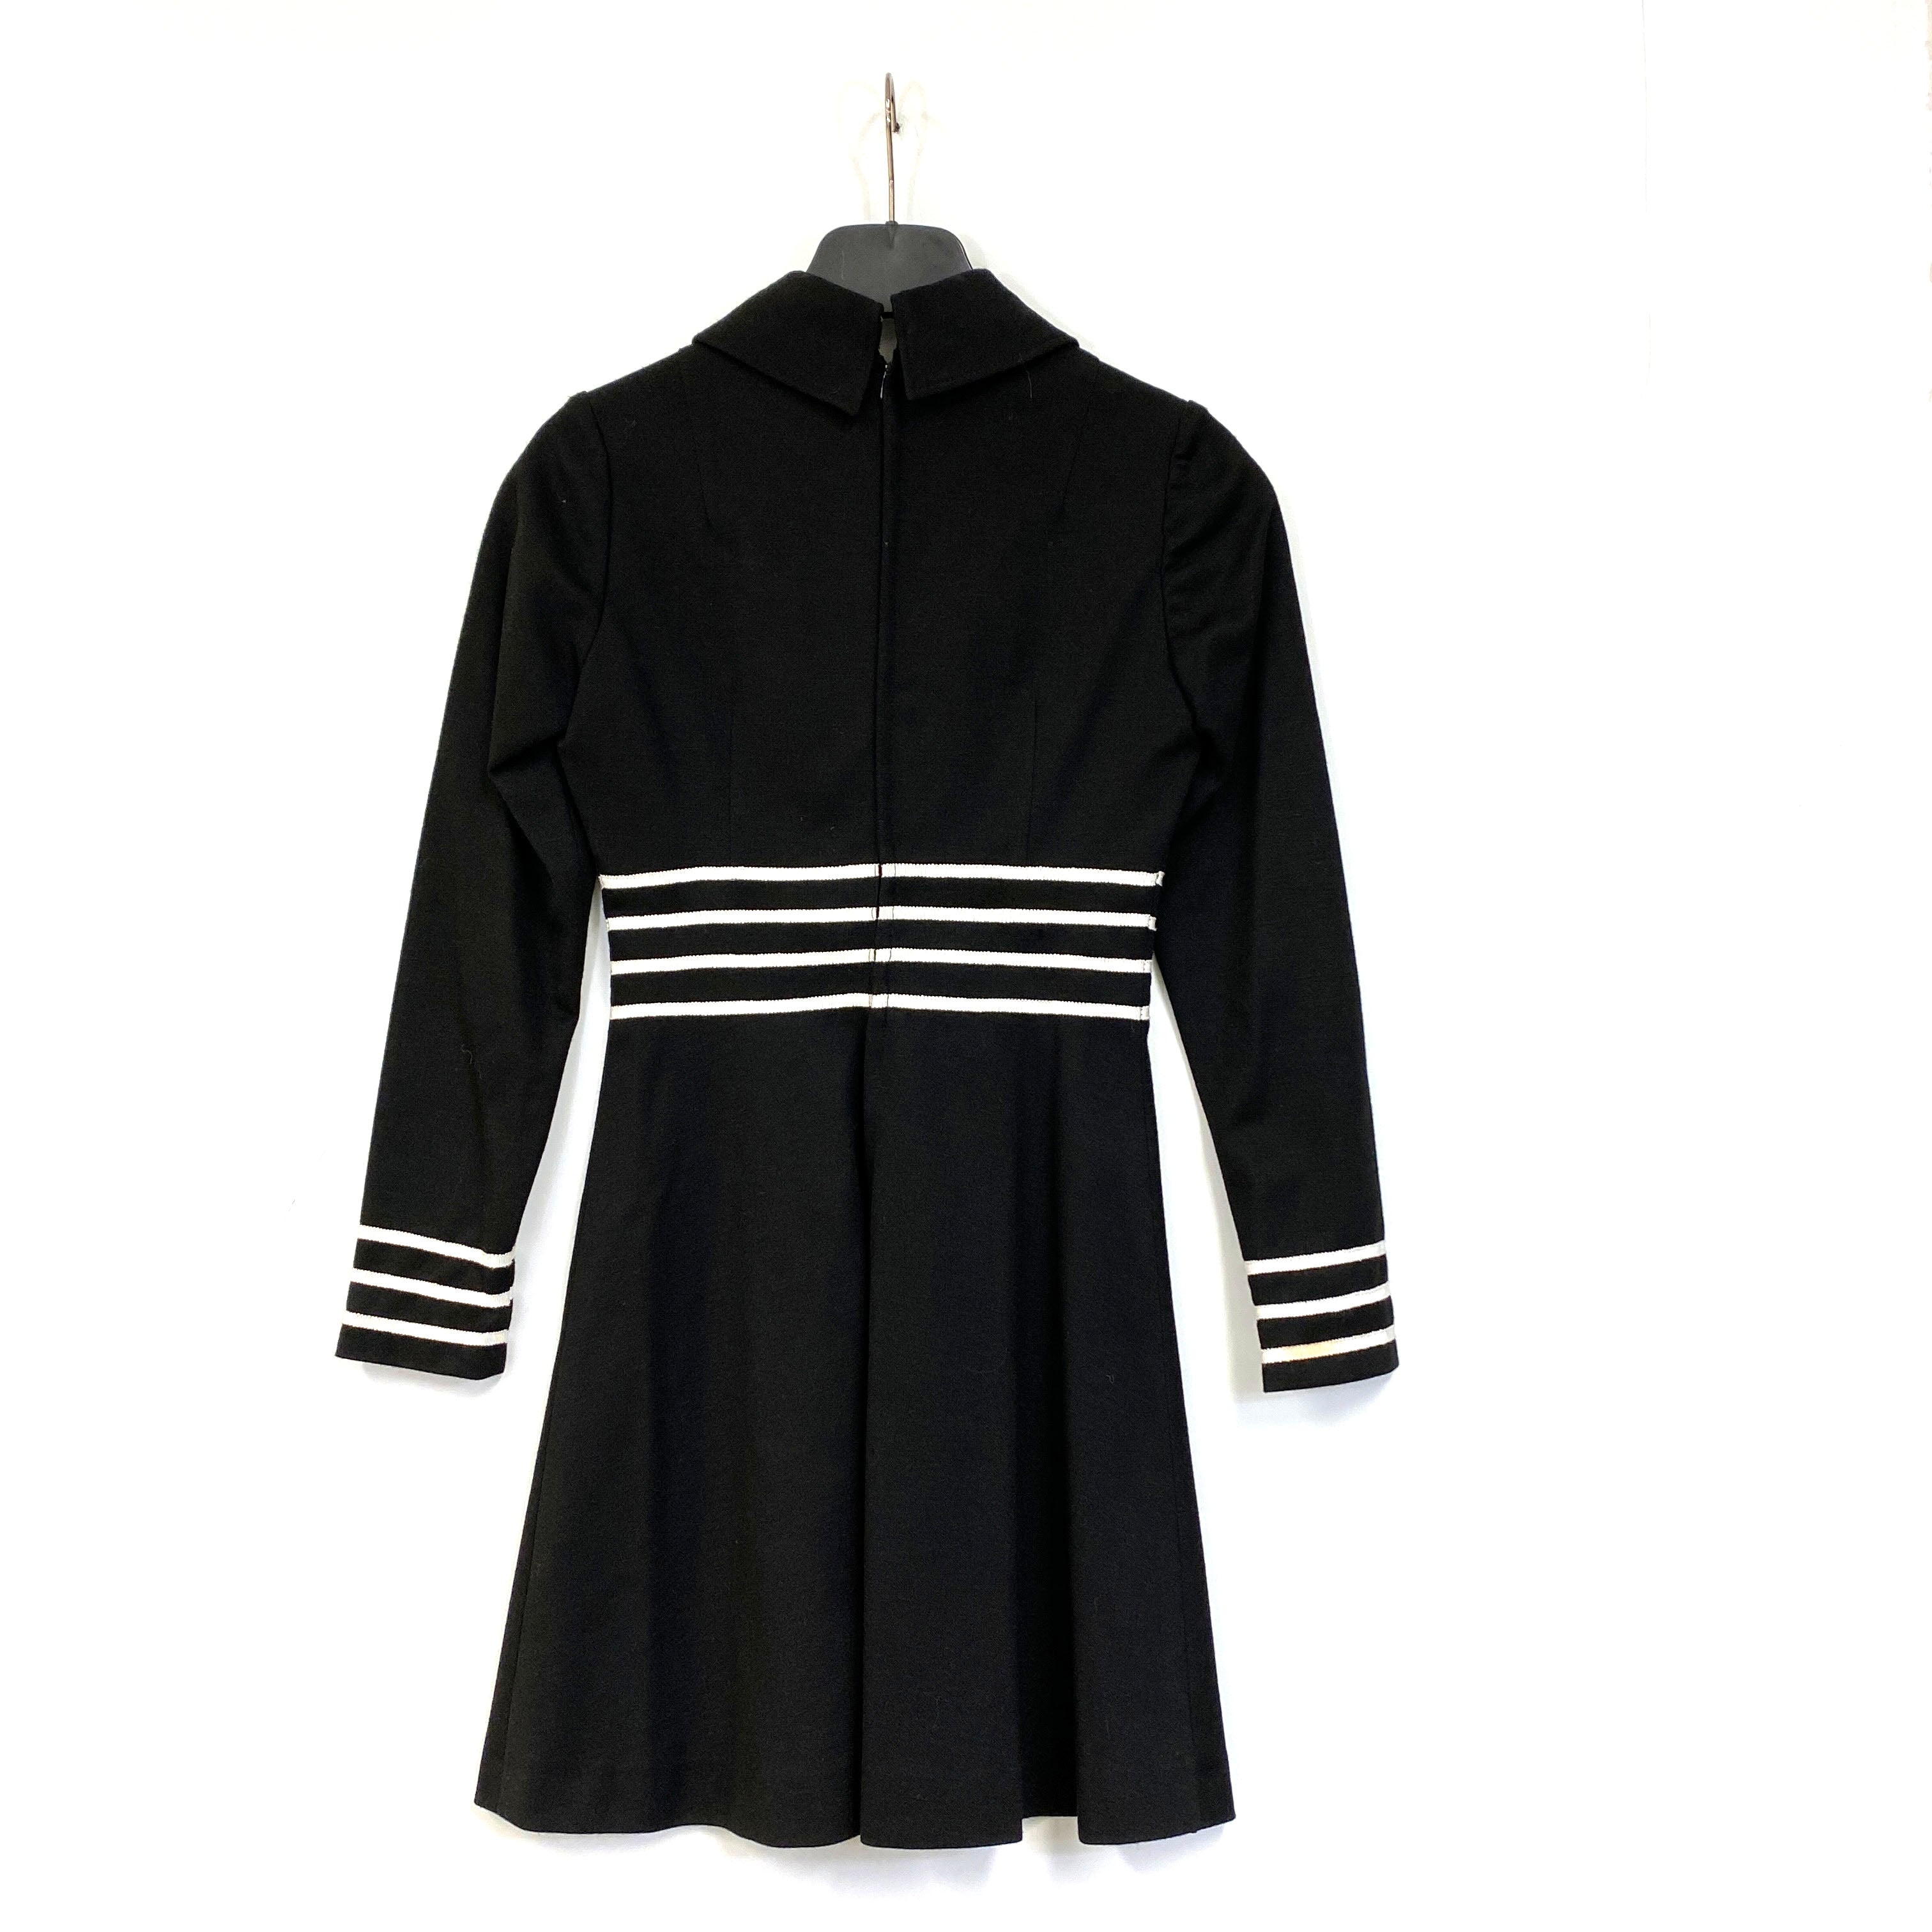 60s Black Dress